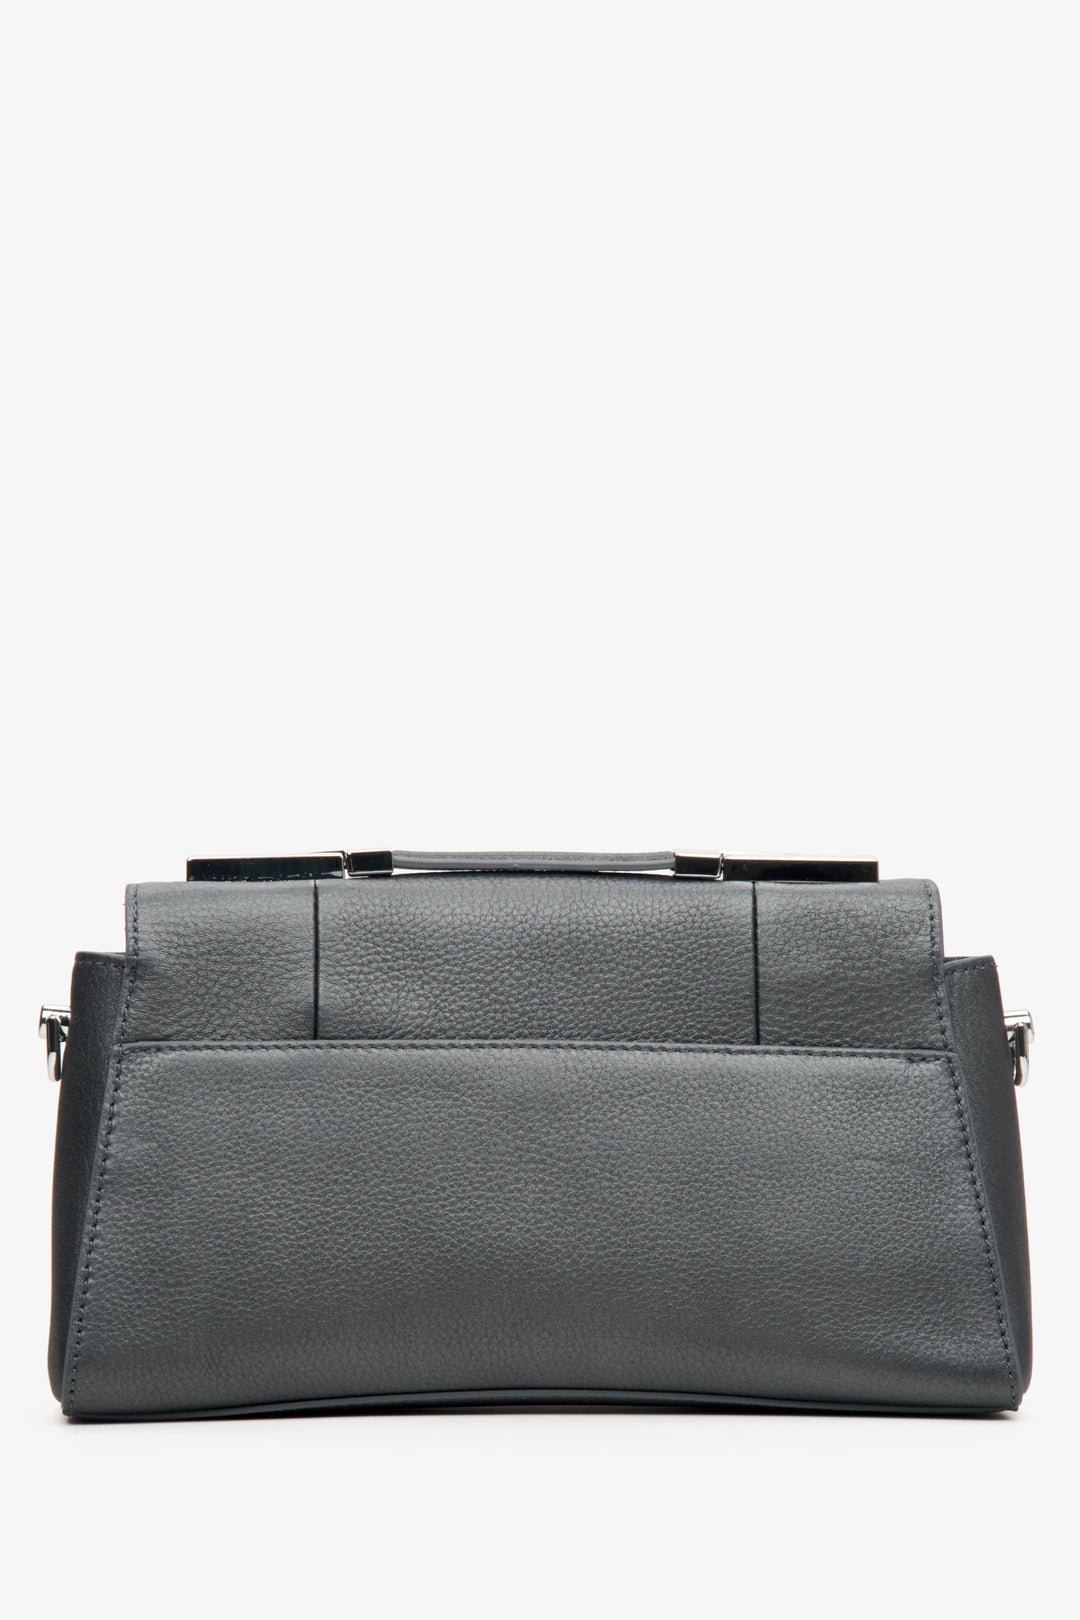 Women's dark grey shoulder bag made of genuine leather by Estro.